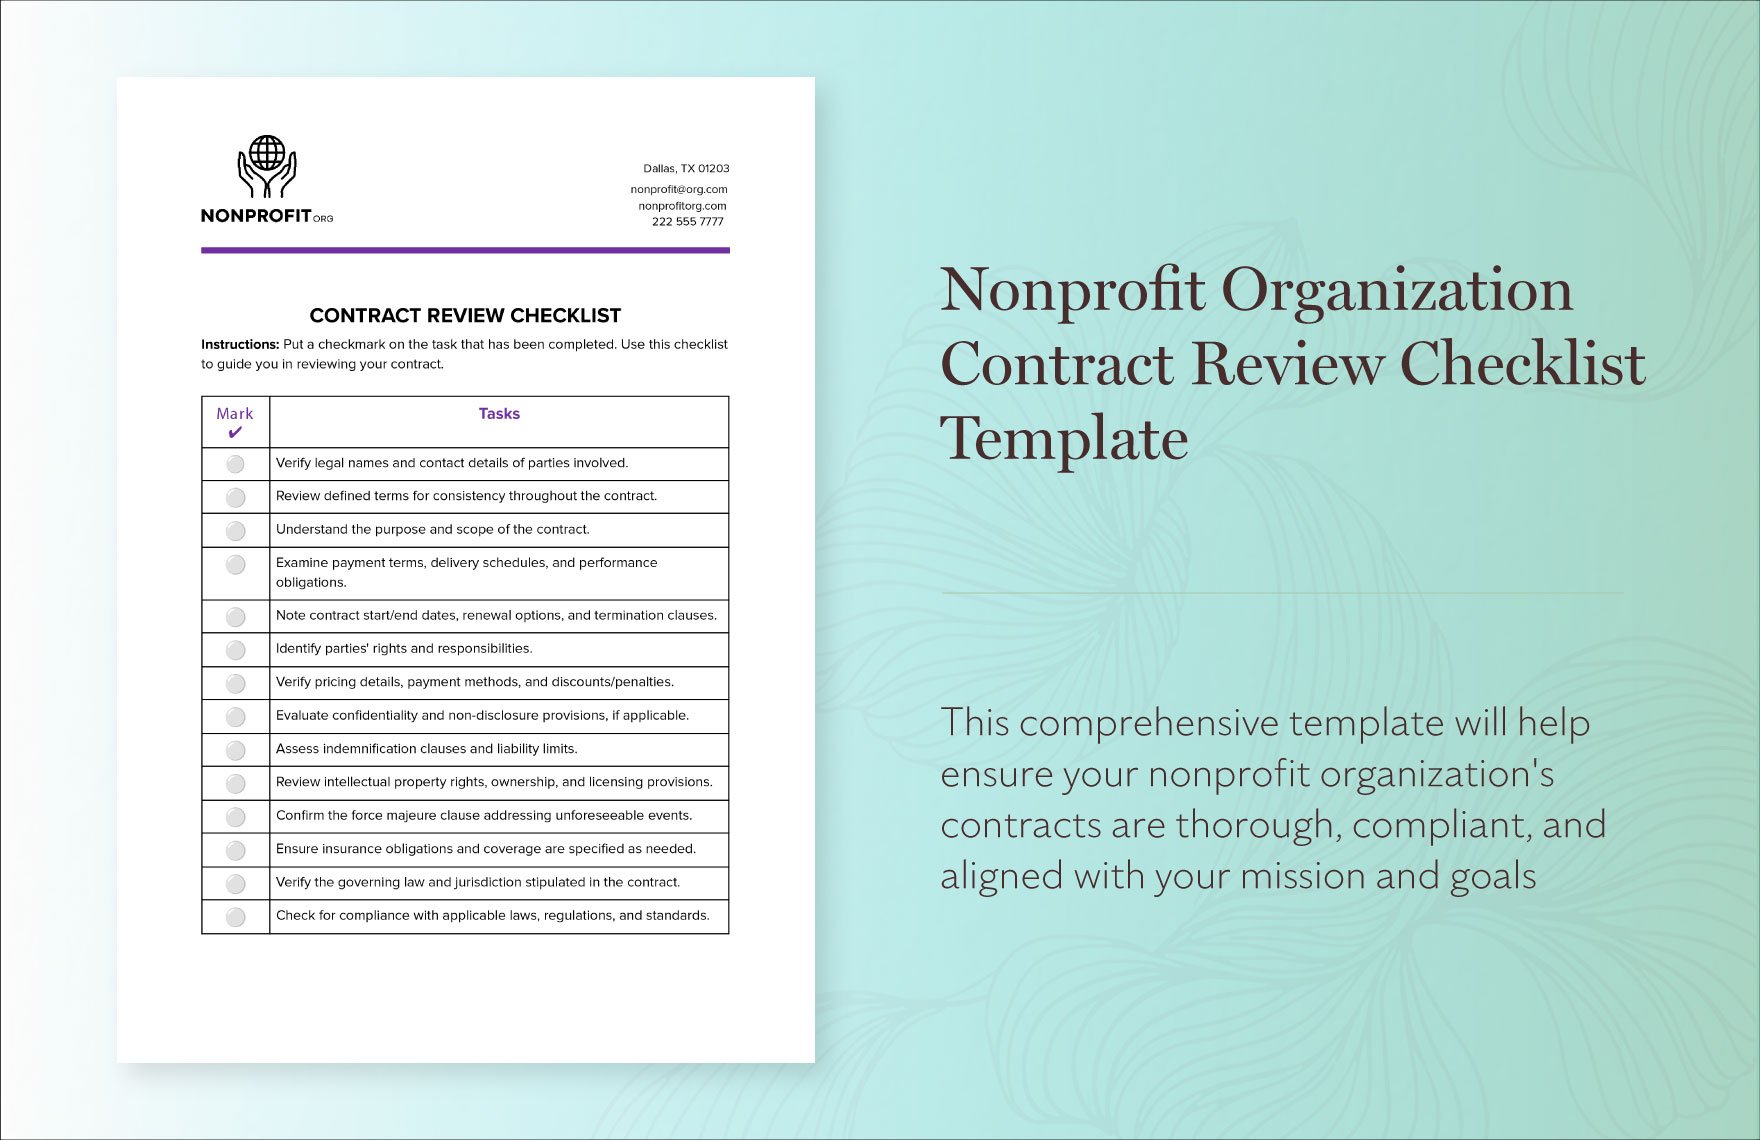 Nonprofit Organization Contract Review Checklist Template